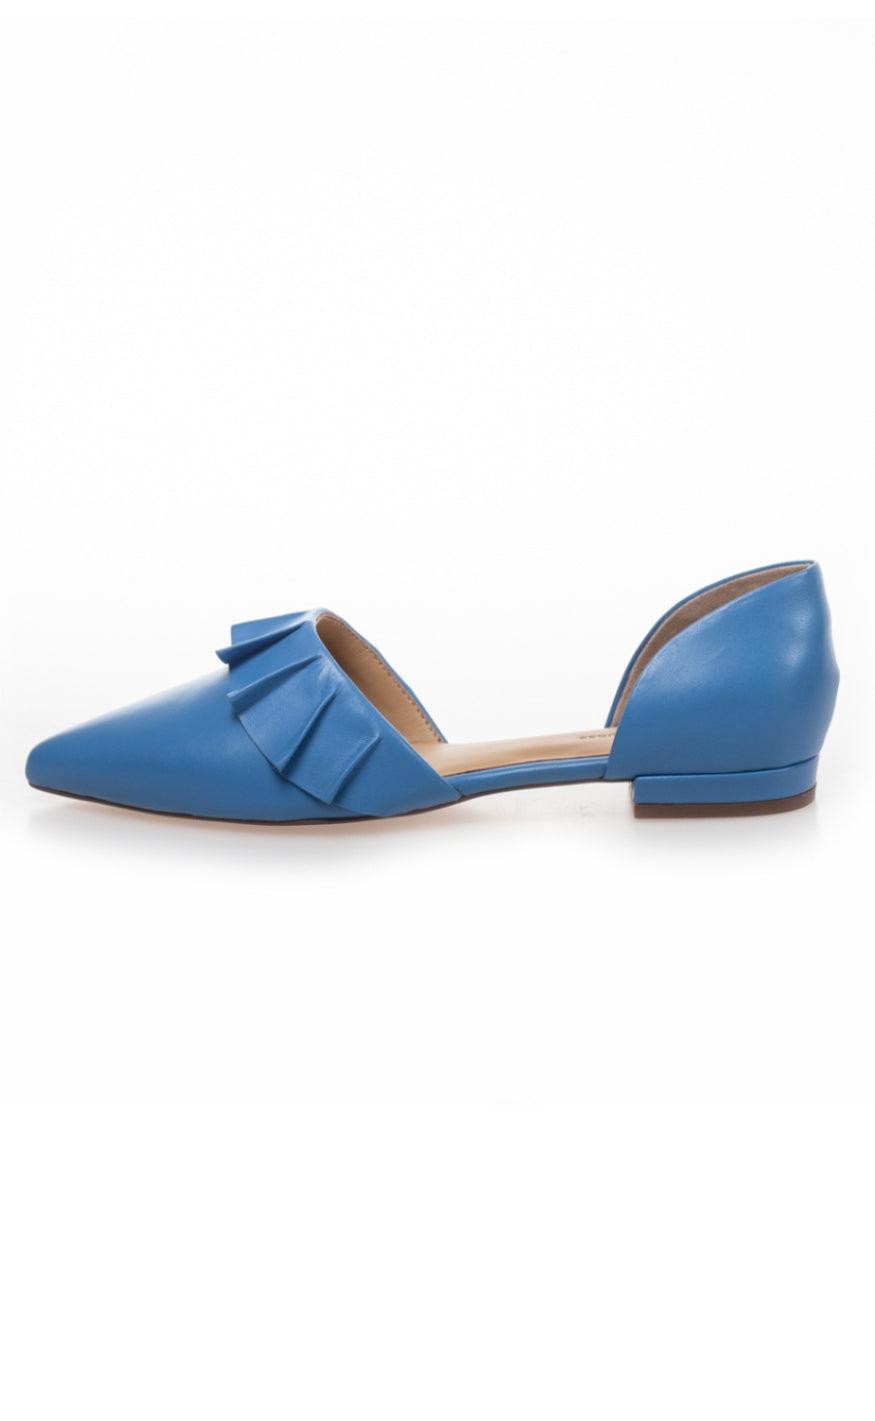 Se Copenhagen Shoes Loafers / Ballerina - New Romance Leather - Electric Blue hos Fashionbystrand